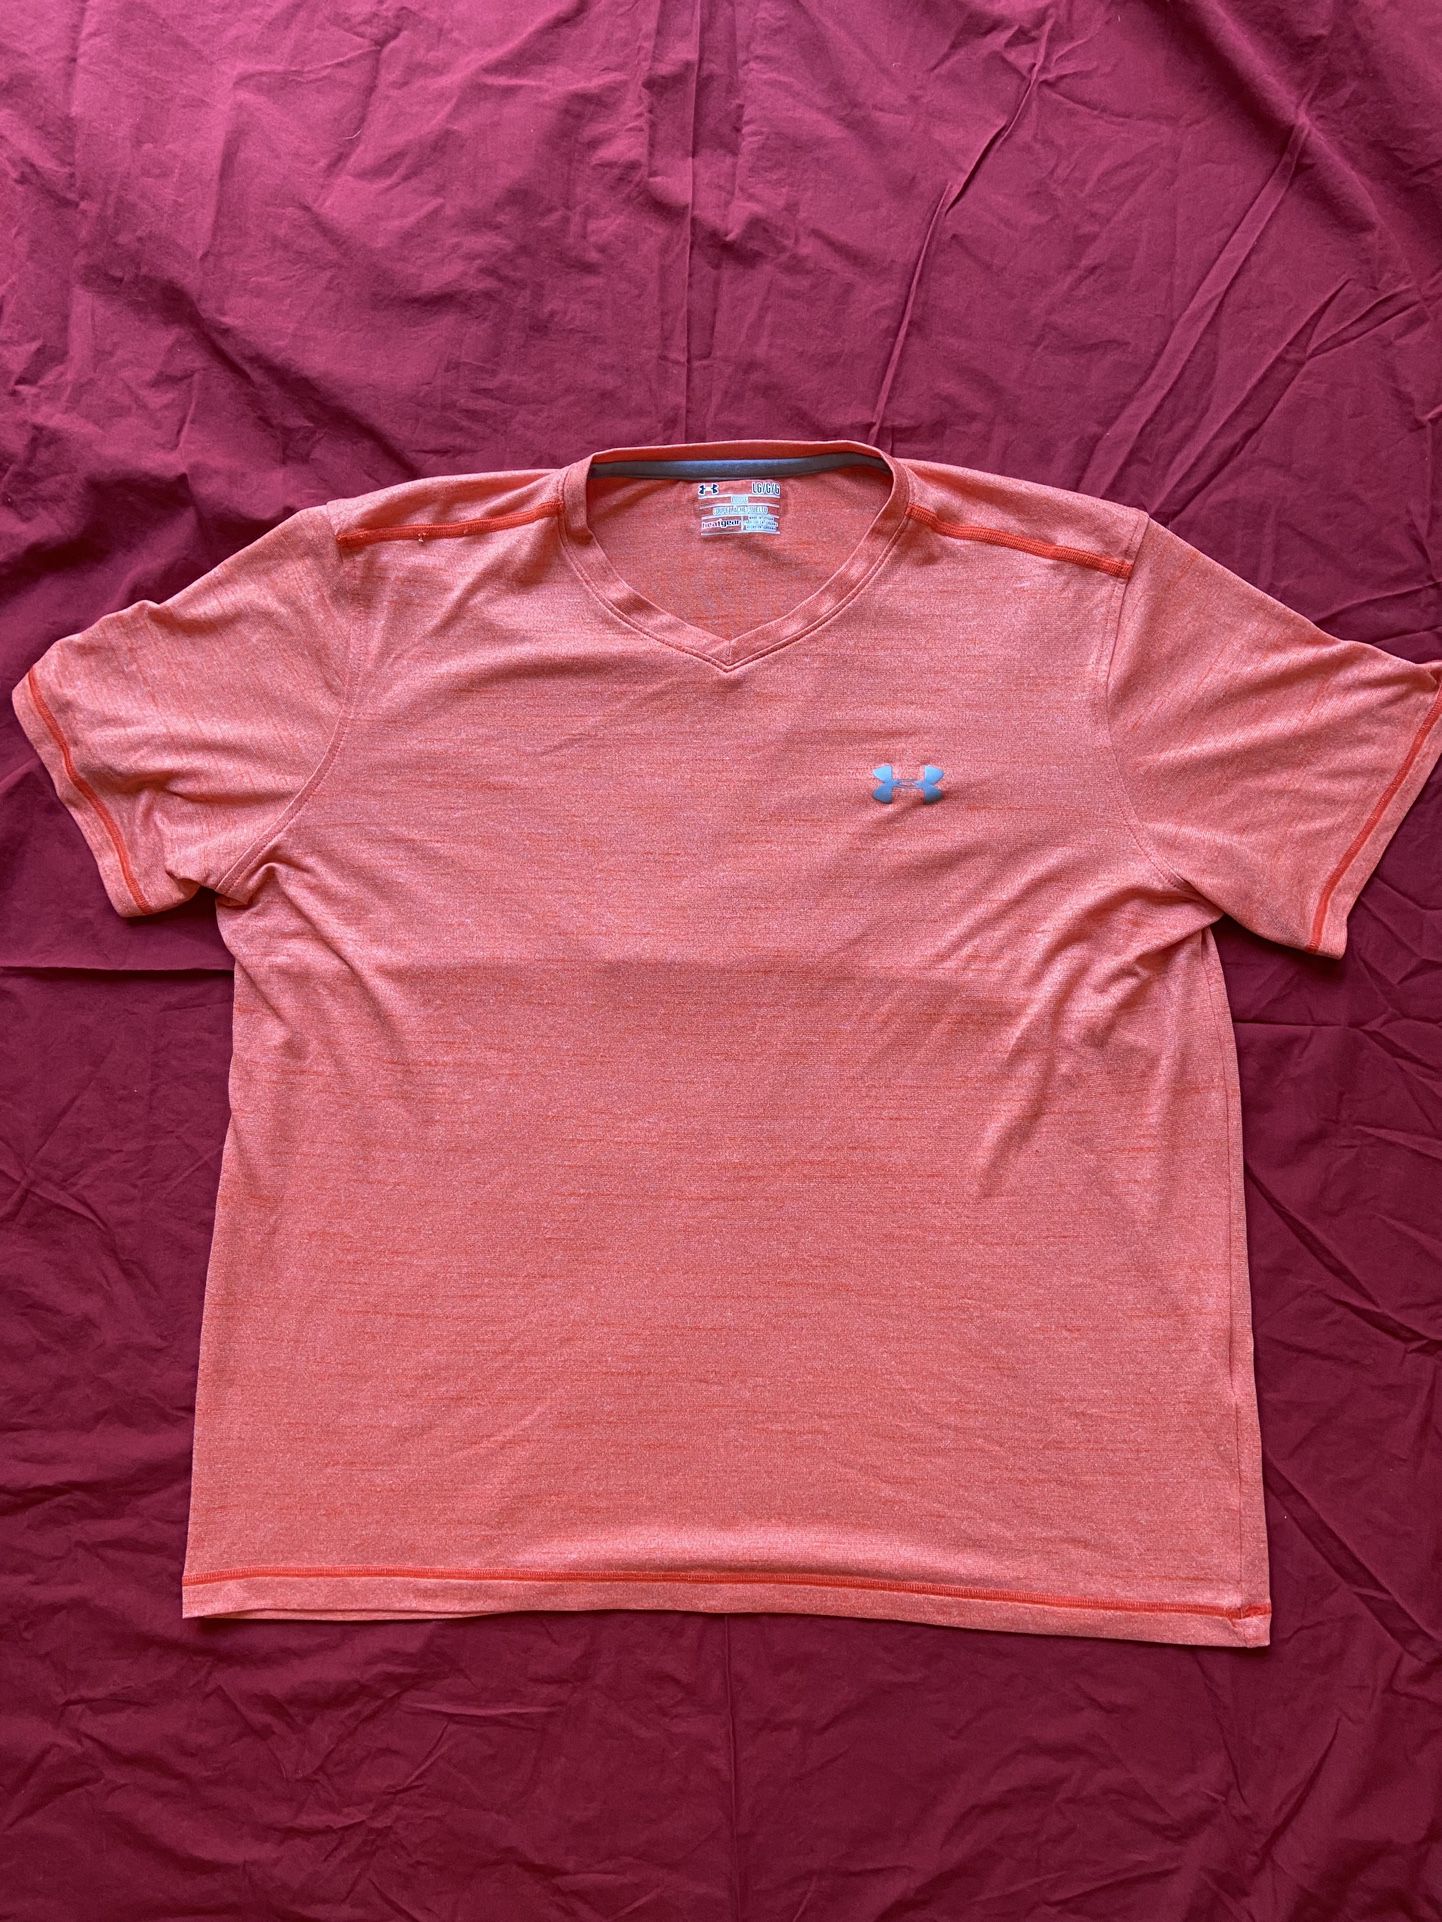 Men's Under Armour HeatGear T-Shirt Size Large Orange